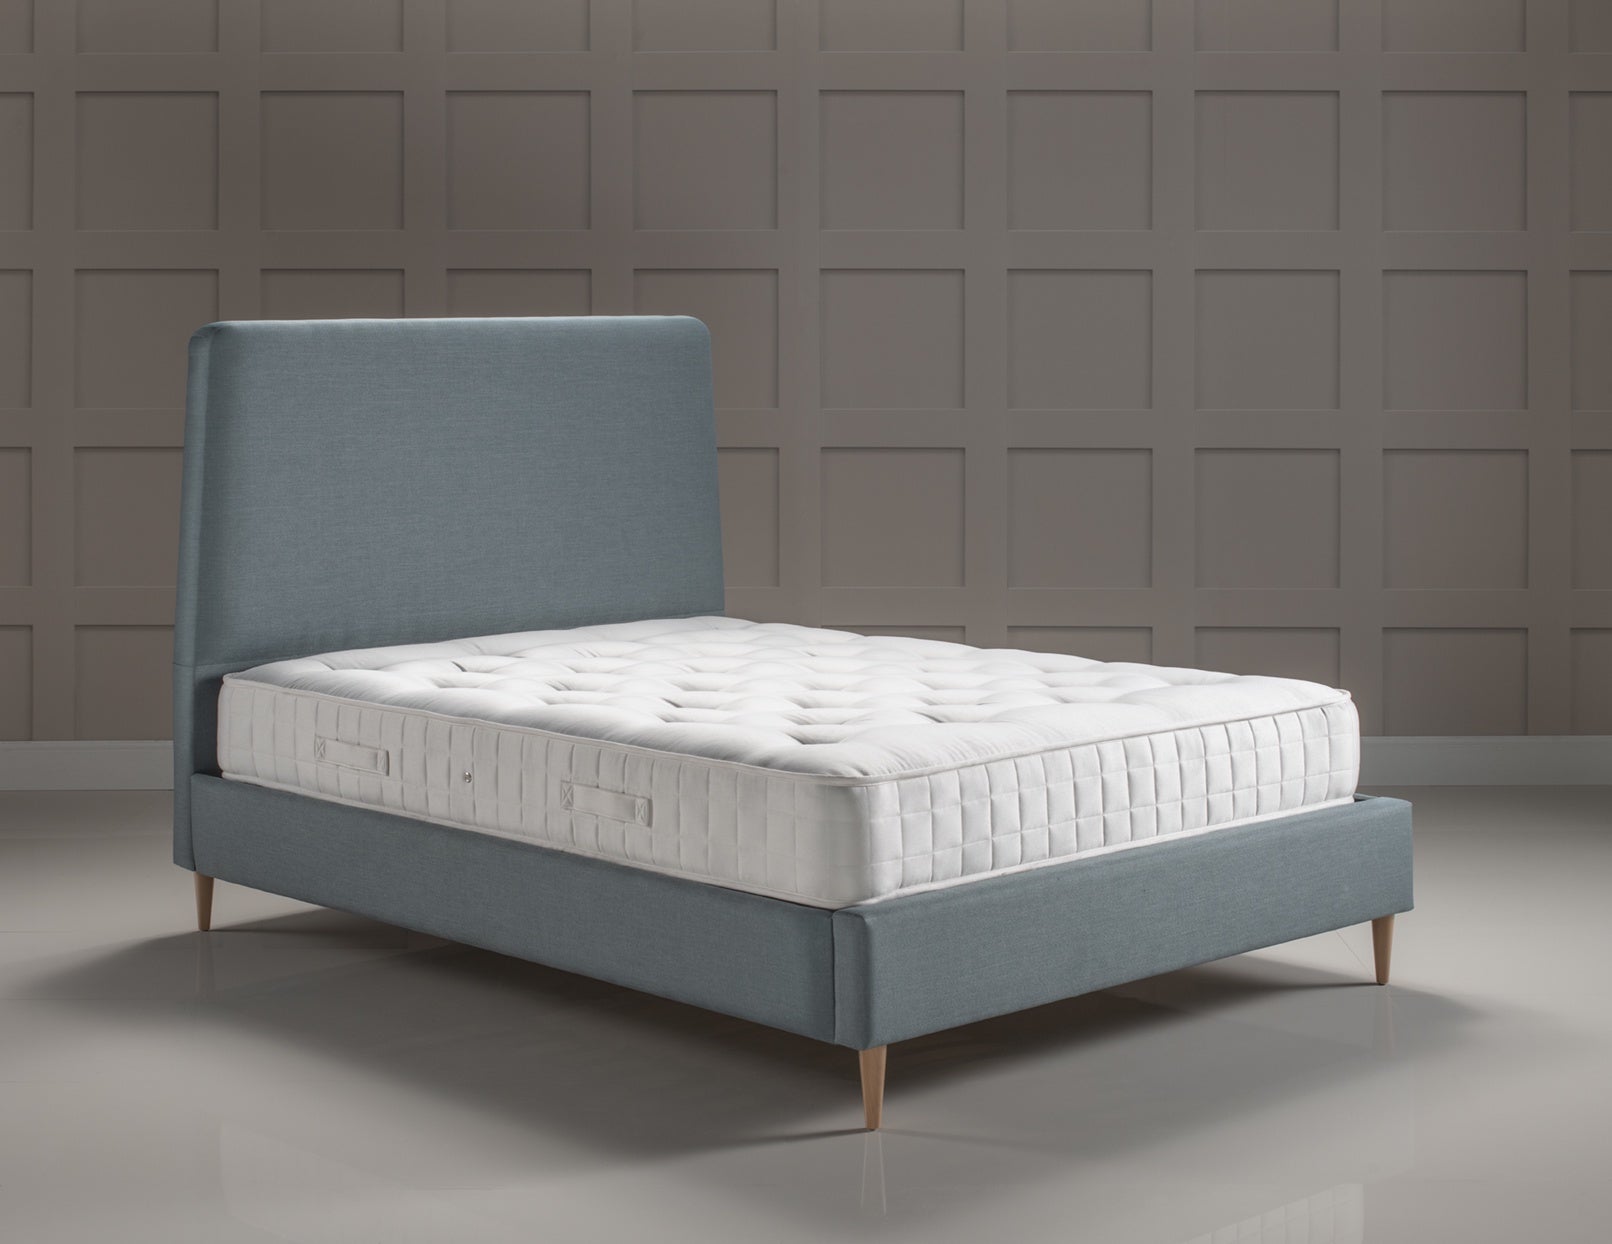 The Haldon Upholstered Bed